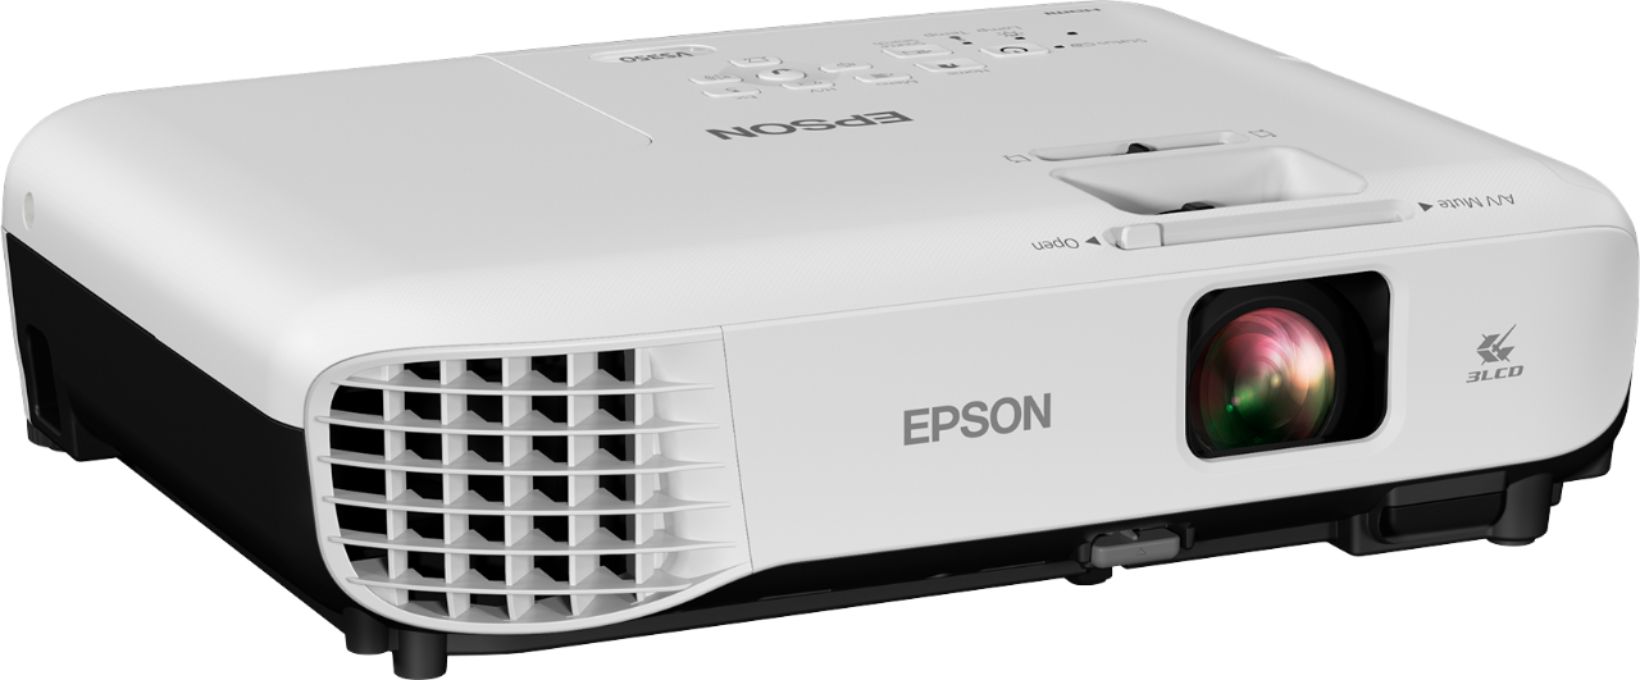 Angle View: Epson - VS350 XGA 3LCD Projector - White